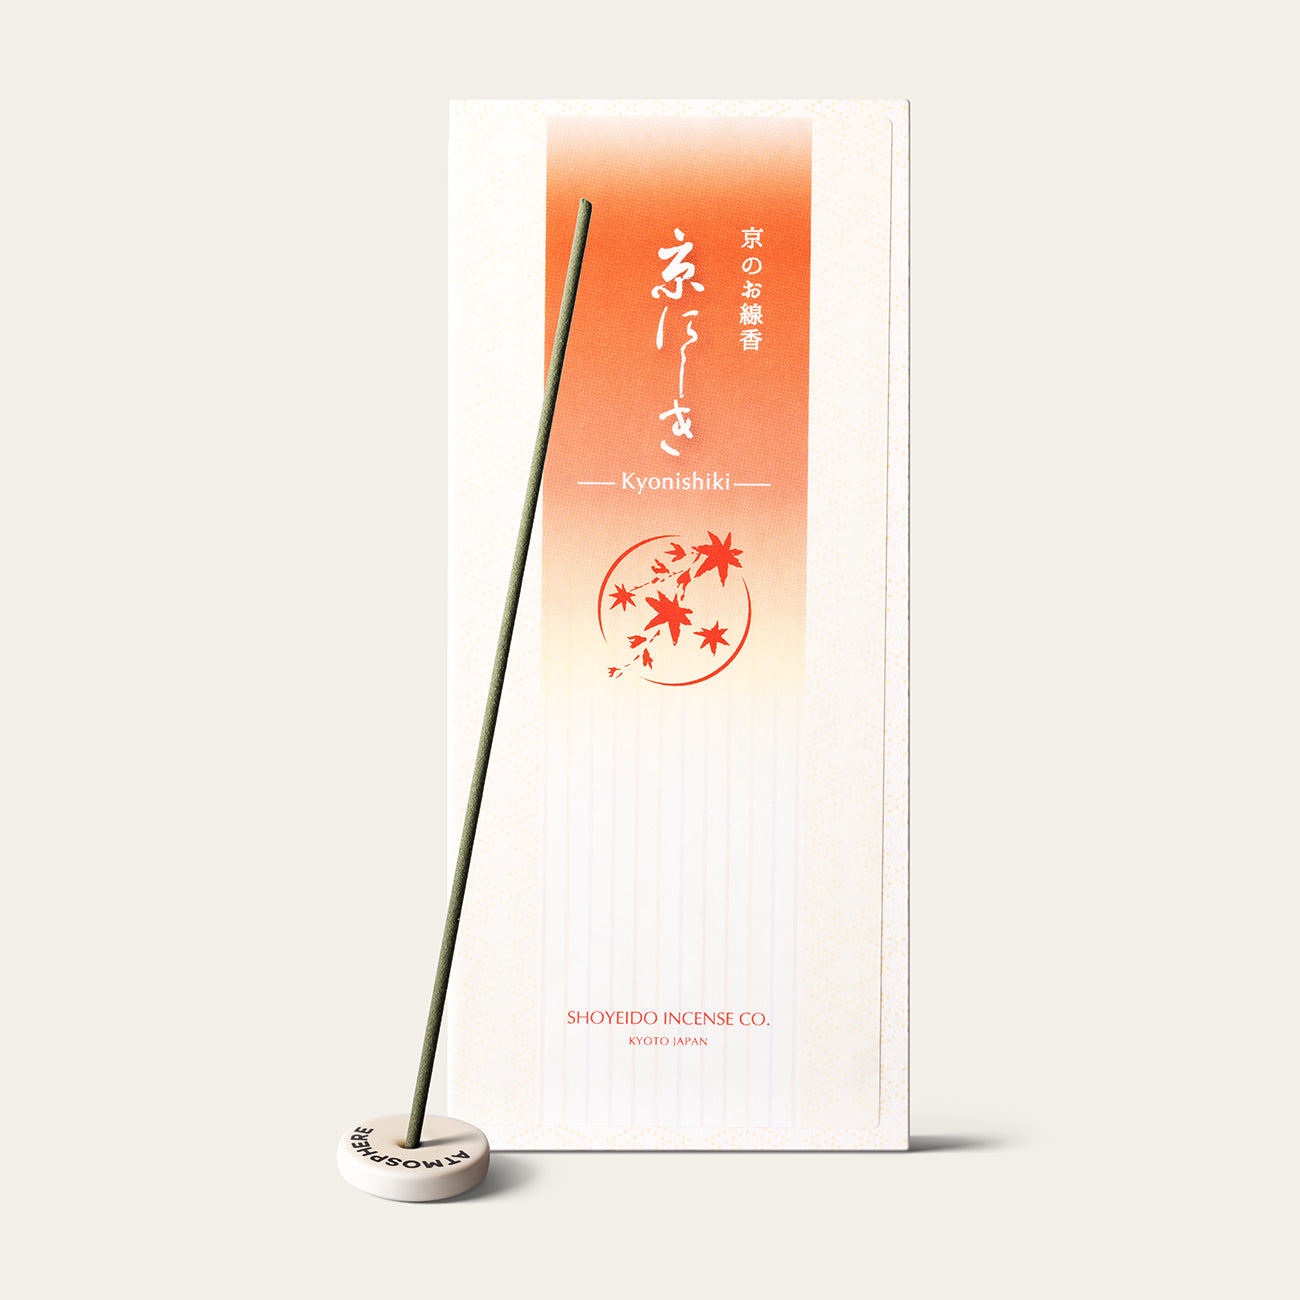 Shoyeido Daily Kyoto Golden Leaves Kyonishiki Japanese incense sticks (150 sticks) with Atmosphere ceramic incense holder